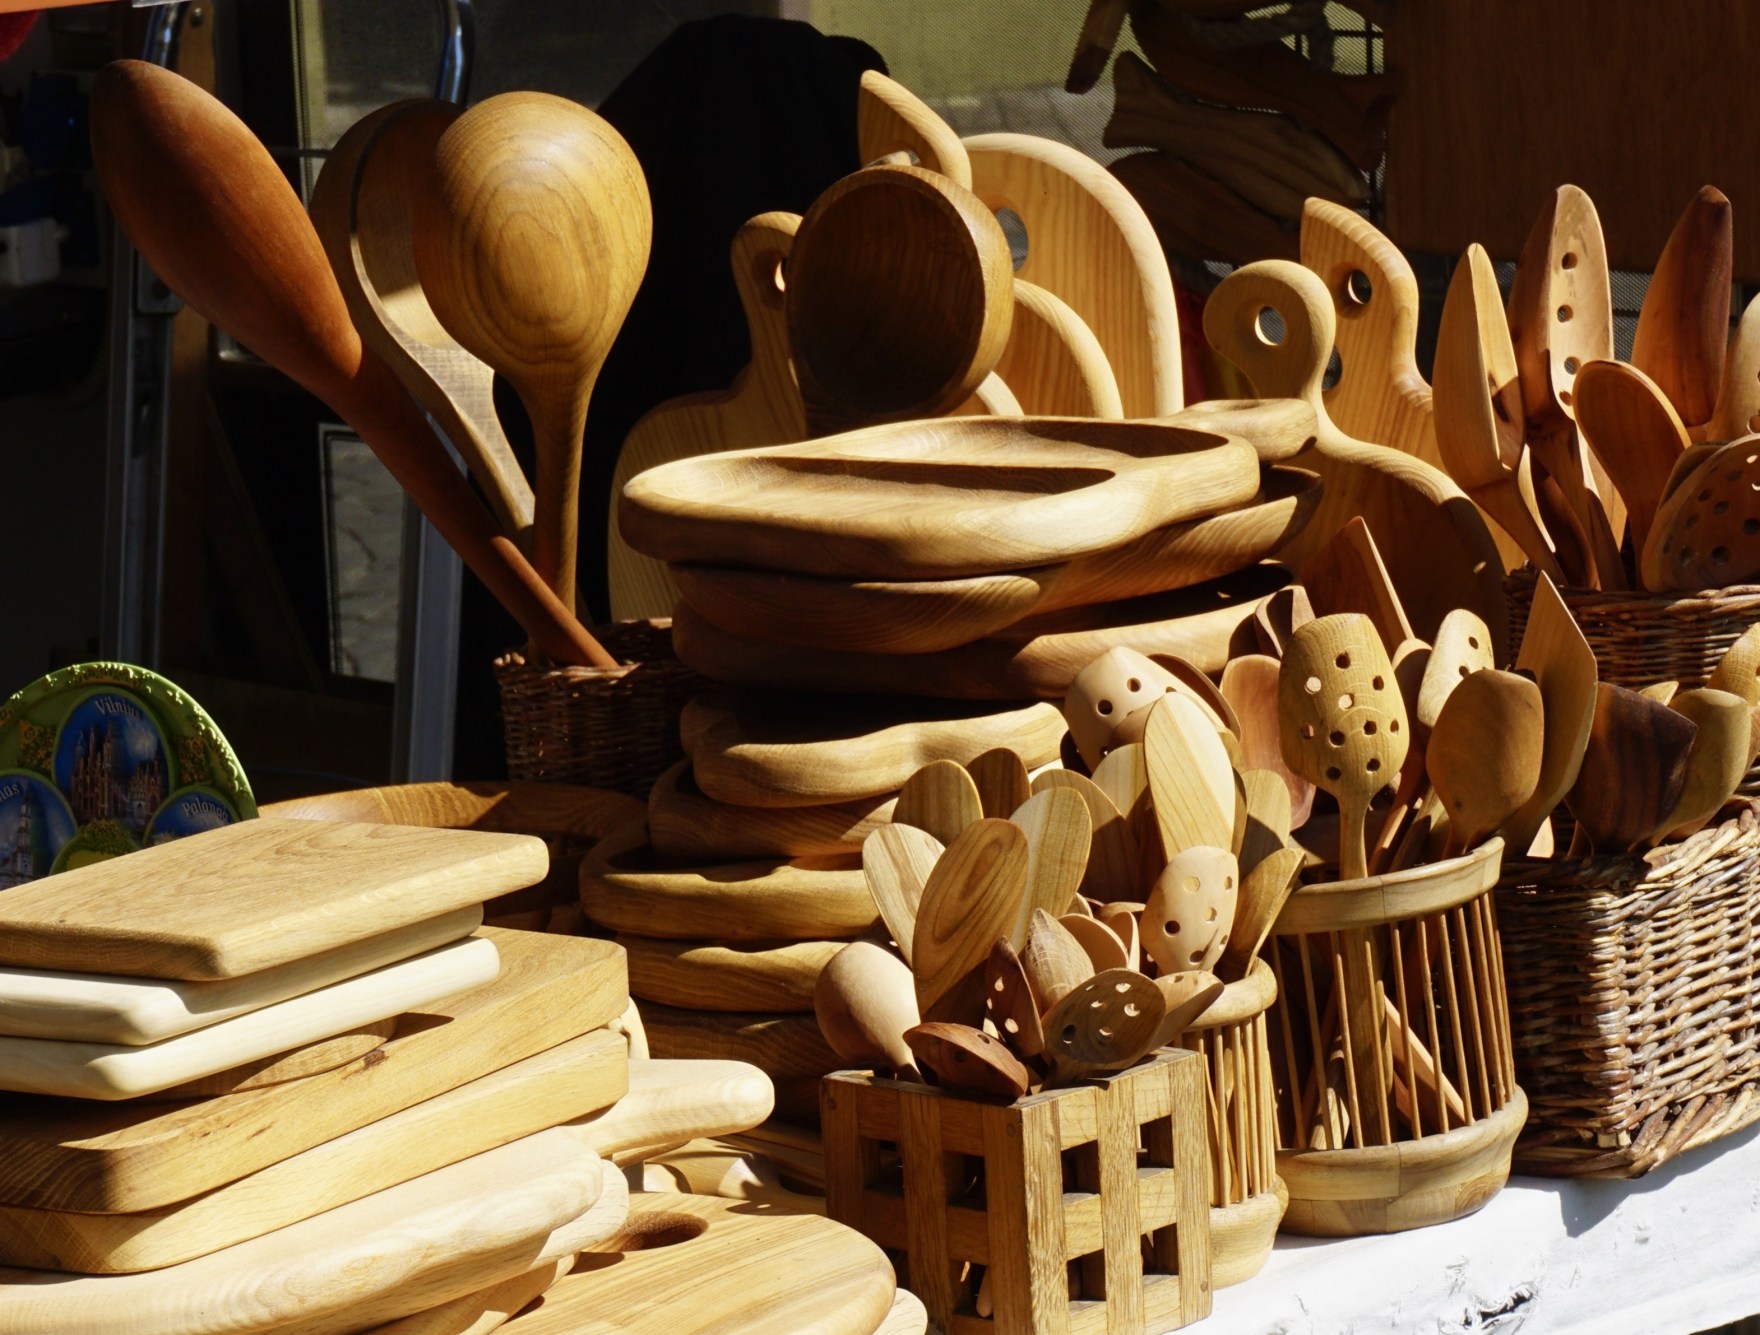 Lithuanian souvenirs - wooden carvings